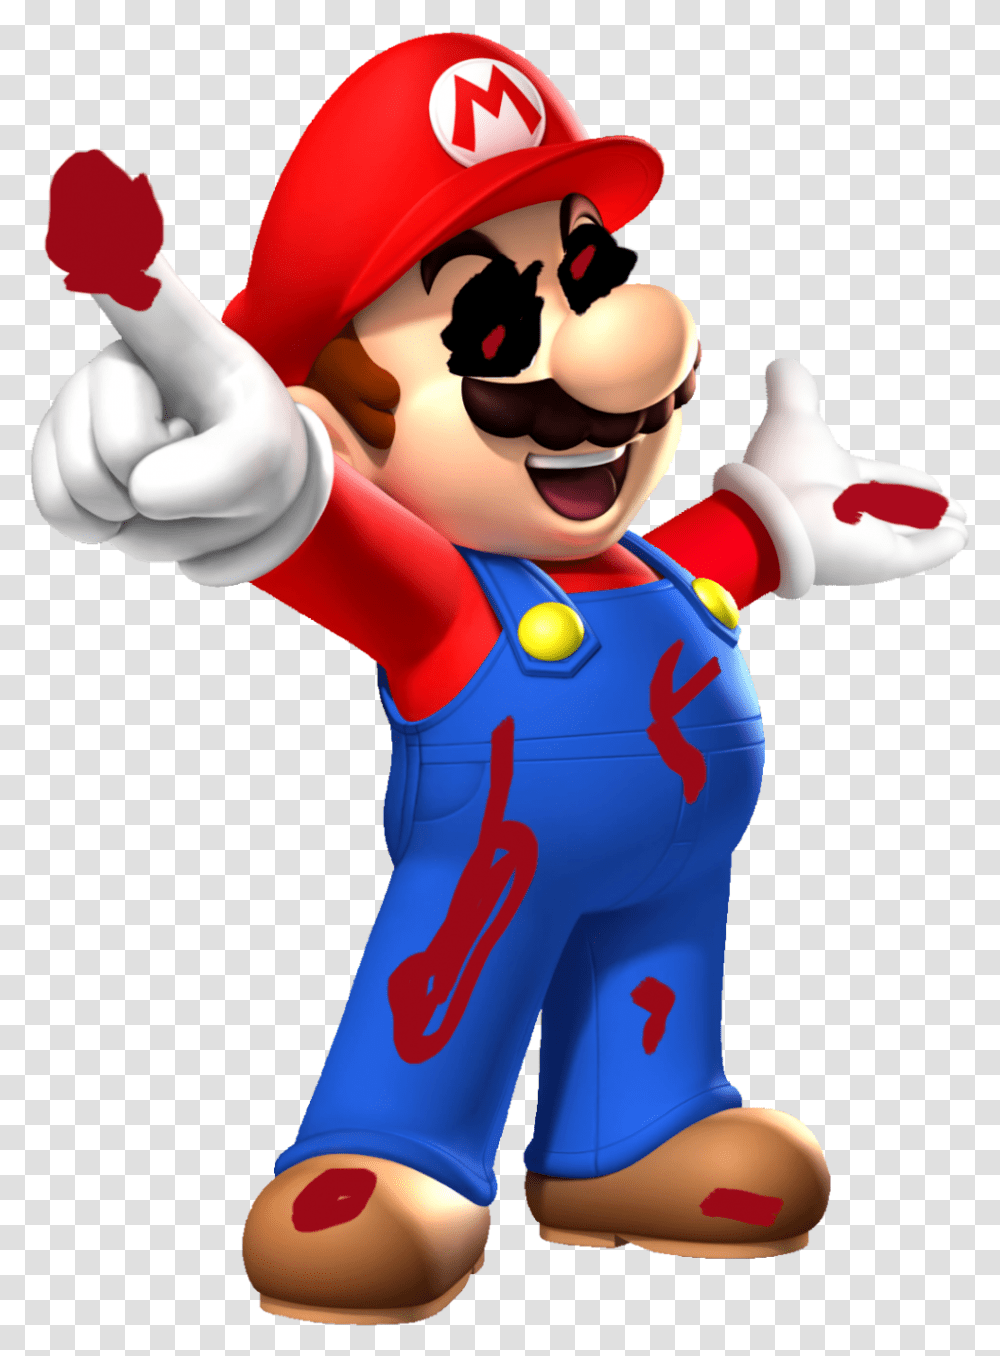 Oblivioushd S Image Mario Party 9 Mario, Super Mario, Toy, Helmet Transparent Png